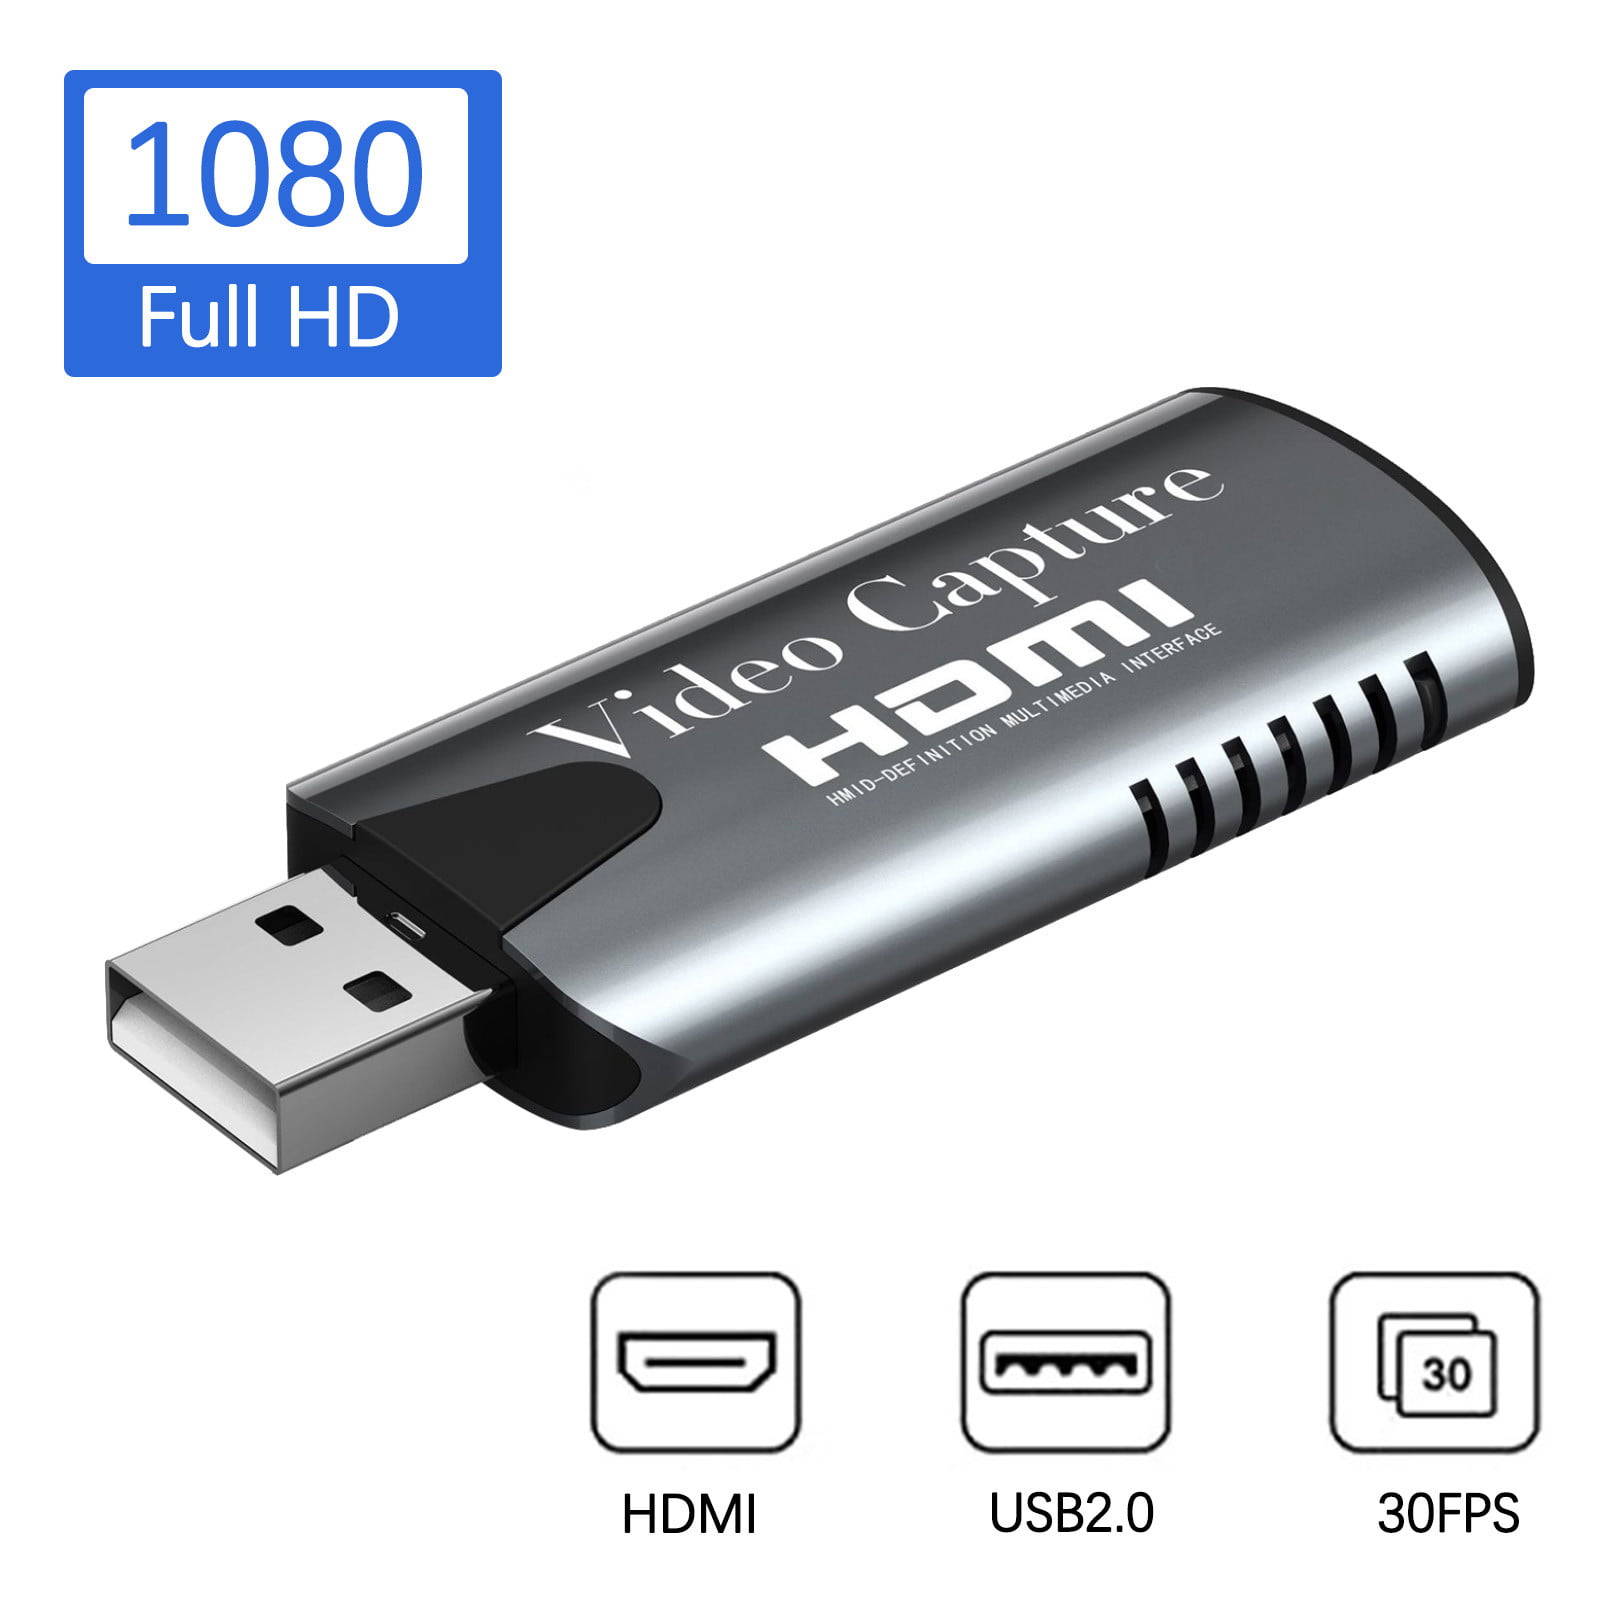 Kruik spanning Een hekel hebben aan iMESTOU Deals Clearance HDMI To USB 2.0 Video Capture Card 1080P HD  Recorder Game/Video Live Streaming - Walmart.com